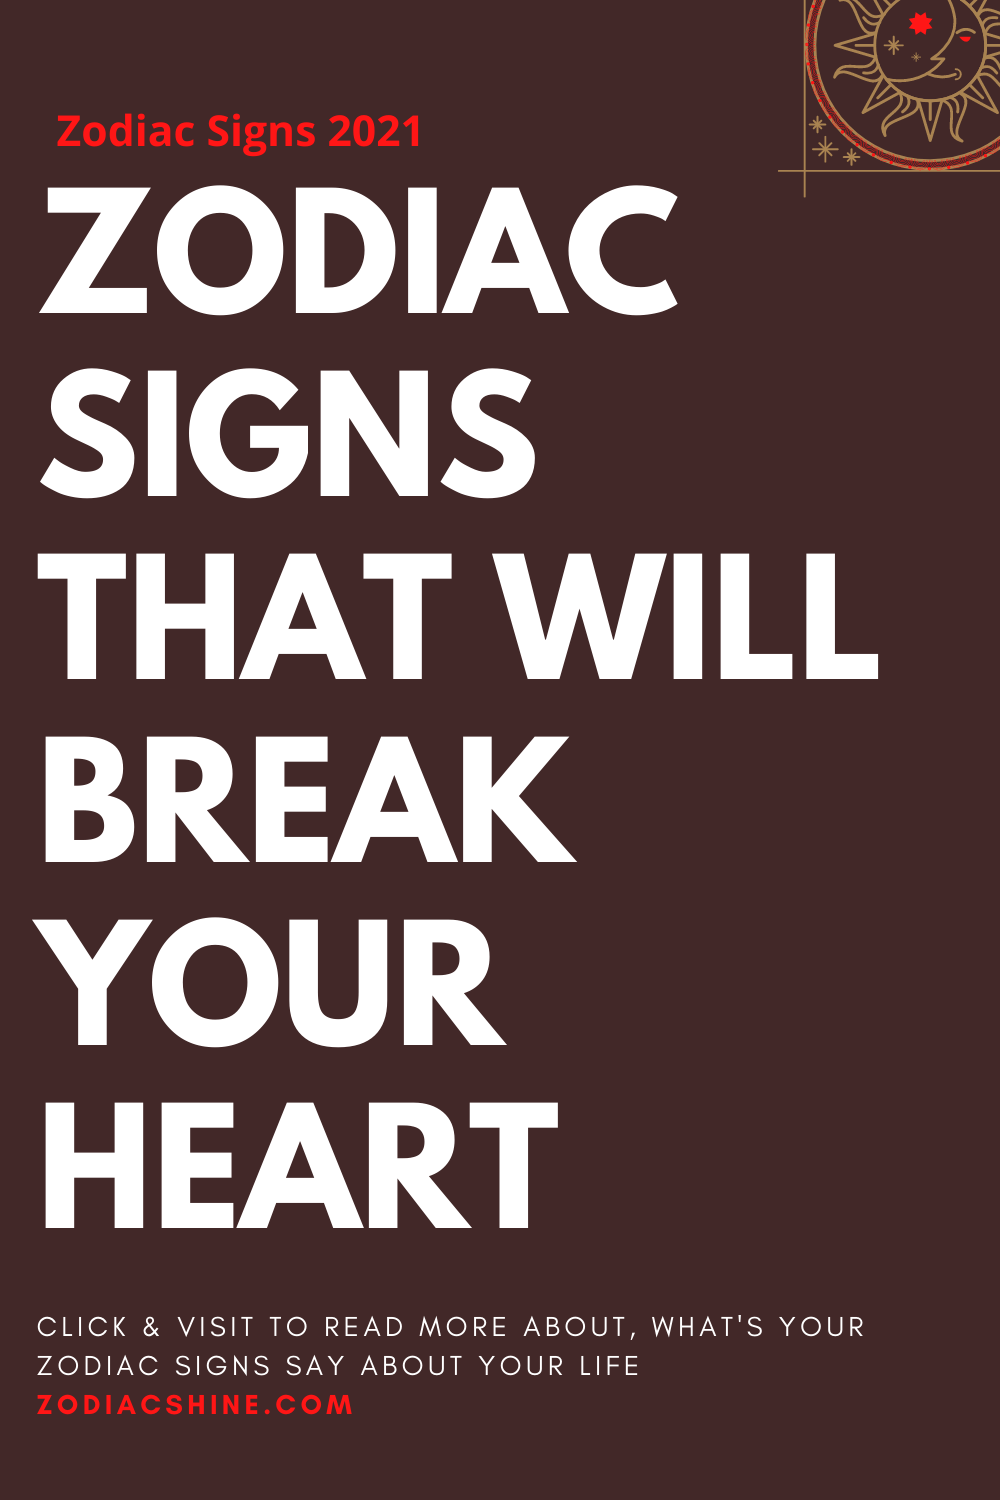 ZODIAC SIGNS THAT WILL BREAK YOUR HEART